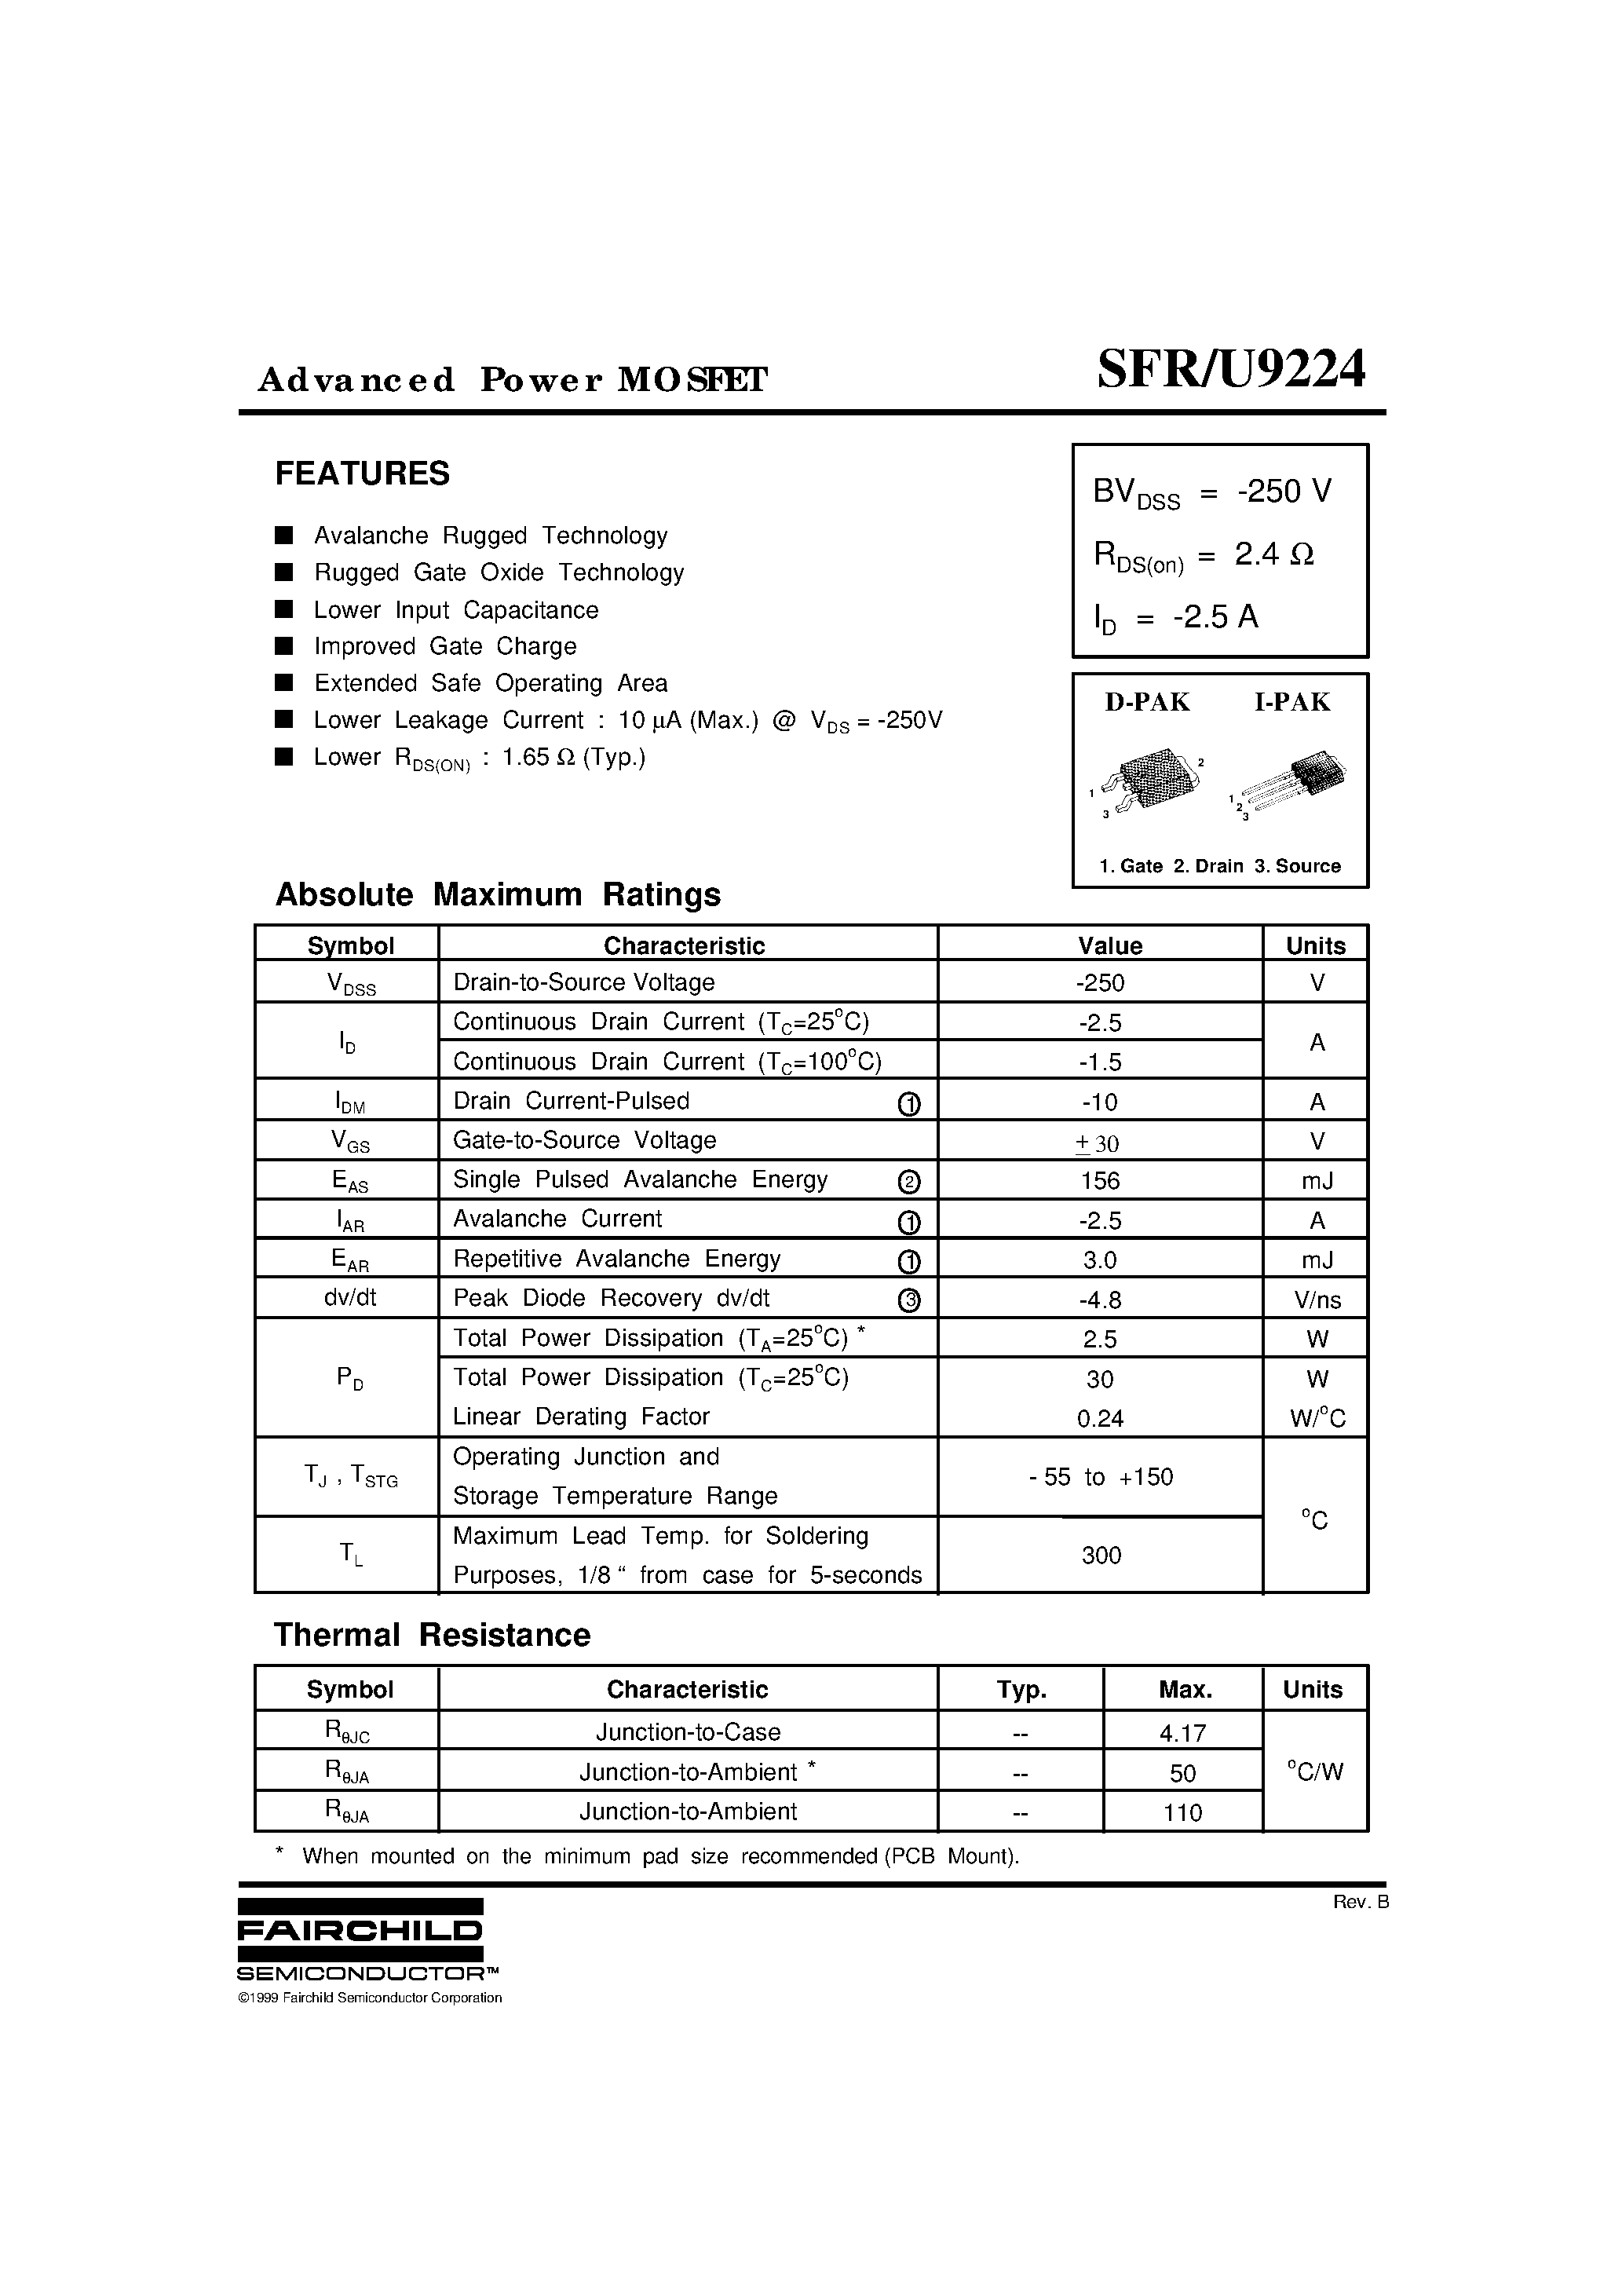 Datasheet SFR9224 - Advanced Power MOSFET page 1